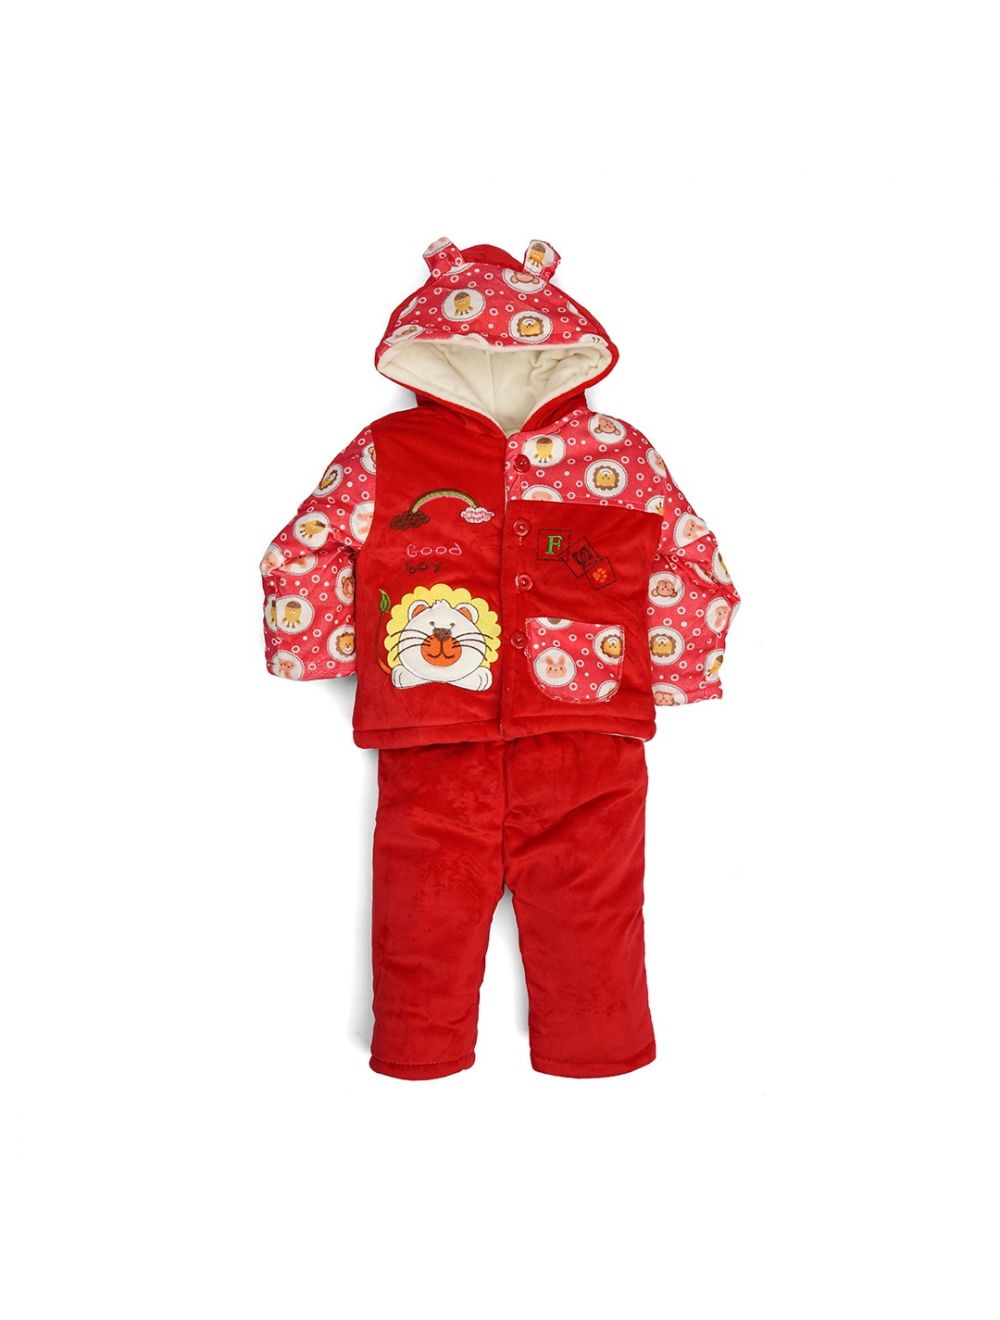 Little Spark Baby Velvet Suit Set Red Lion (12-18 Months)